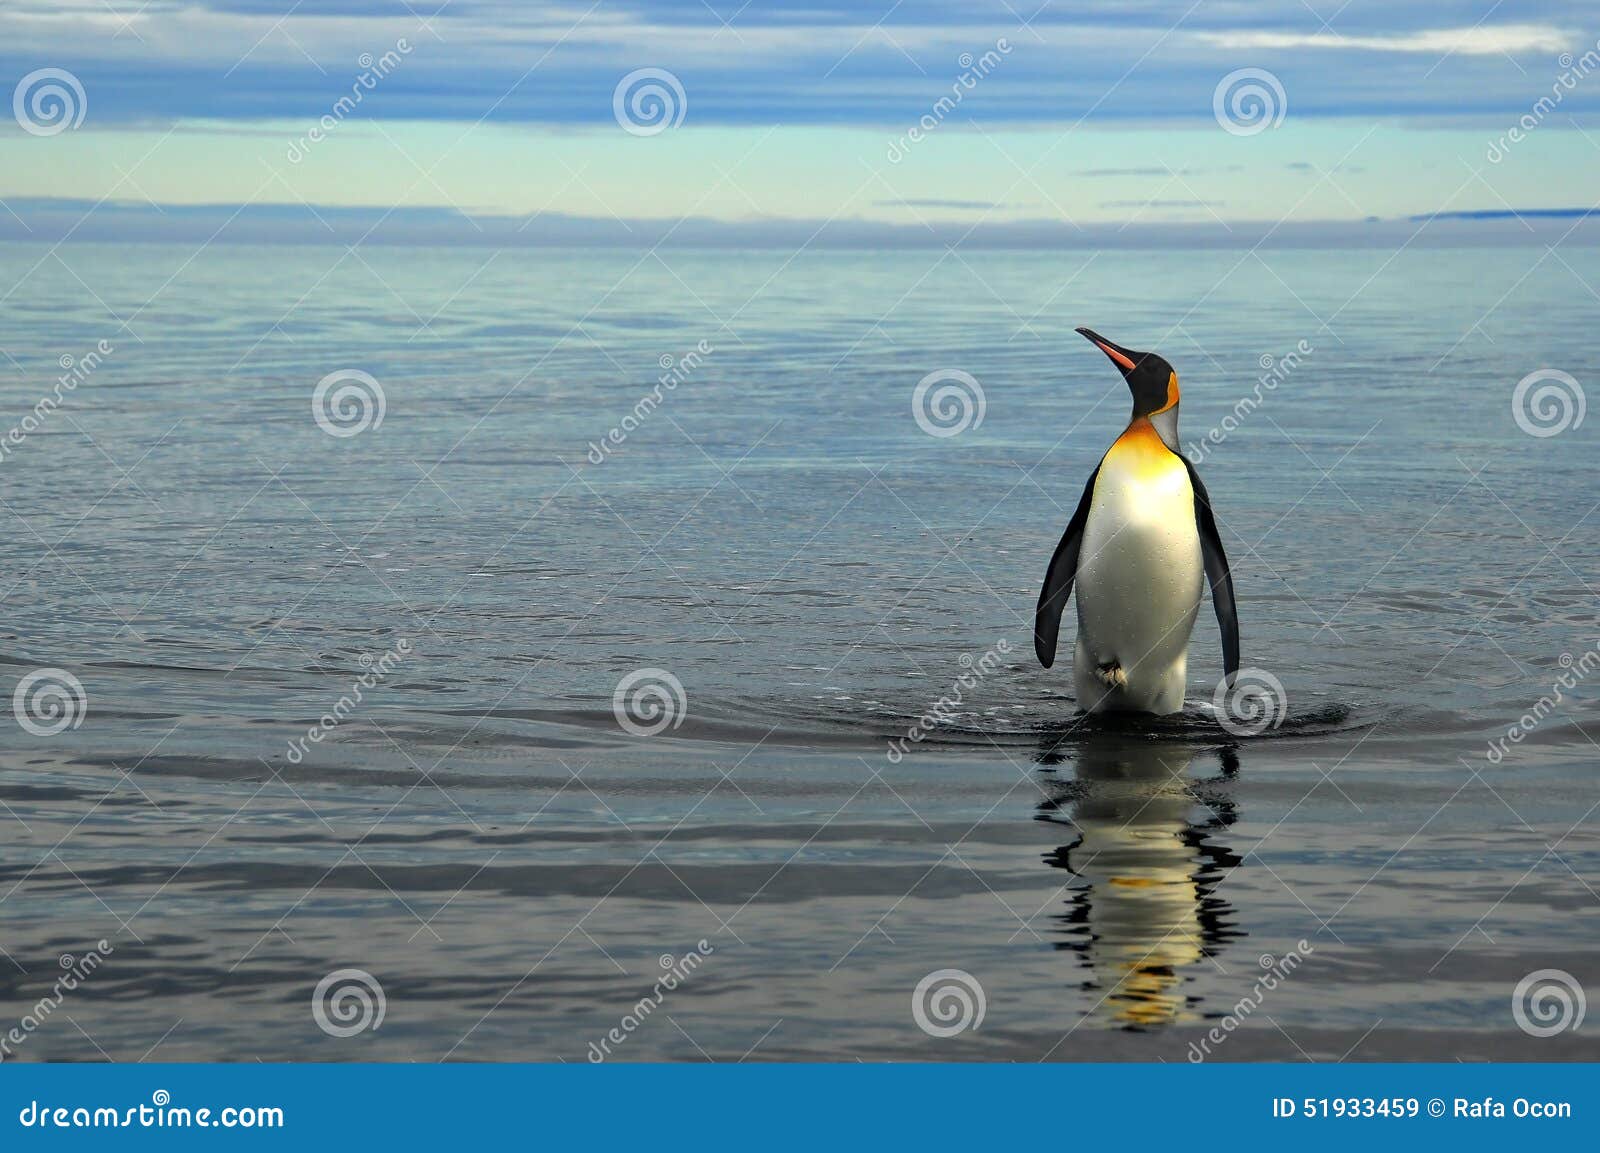 king penguins in southamerica